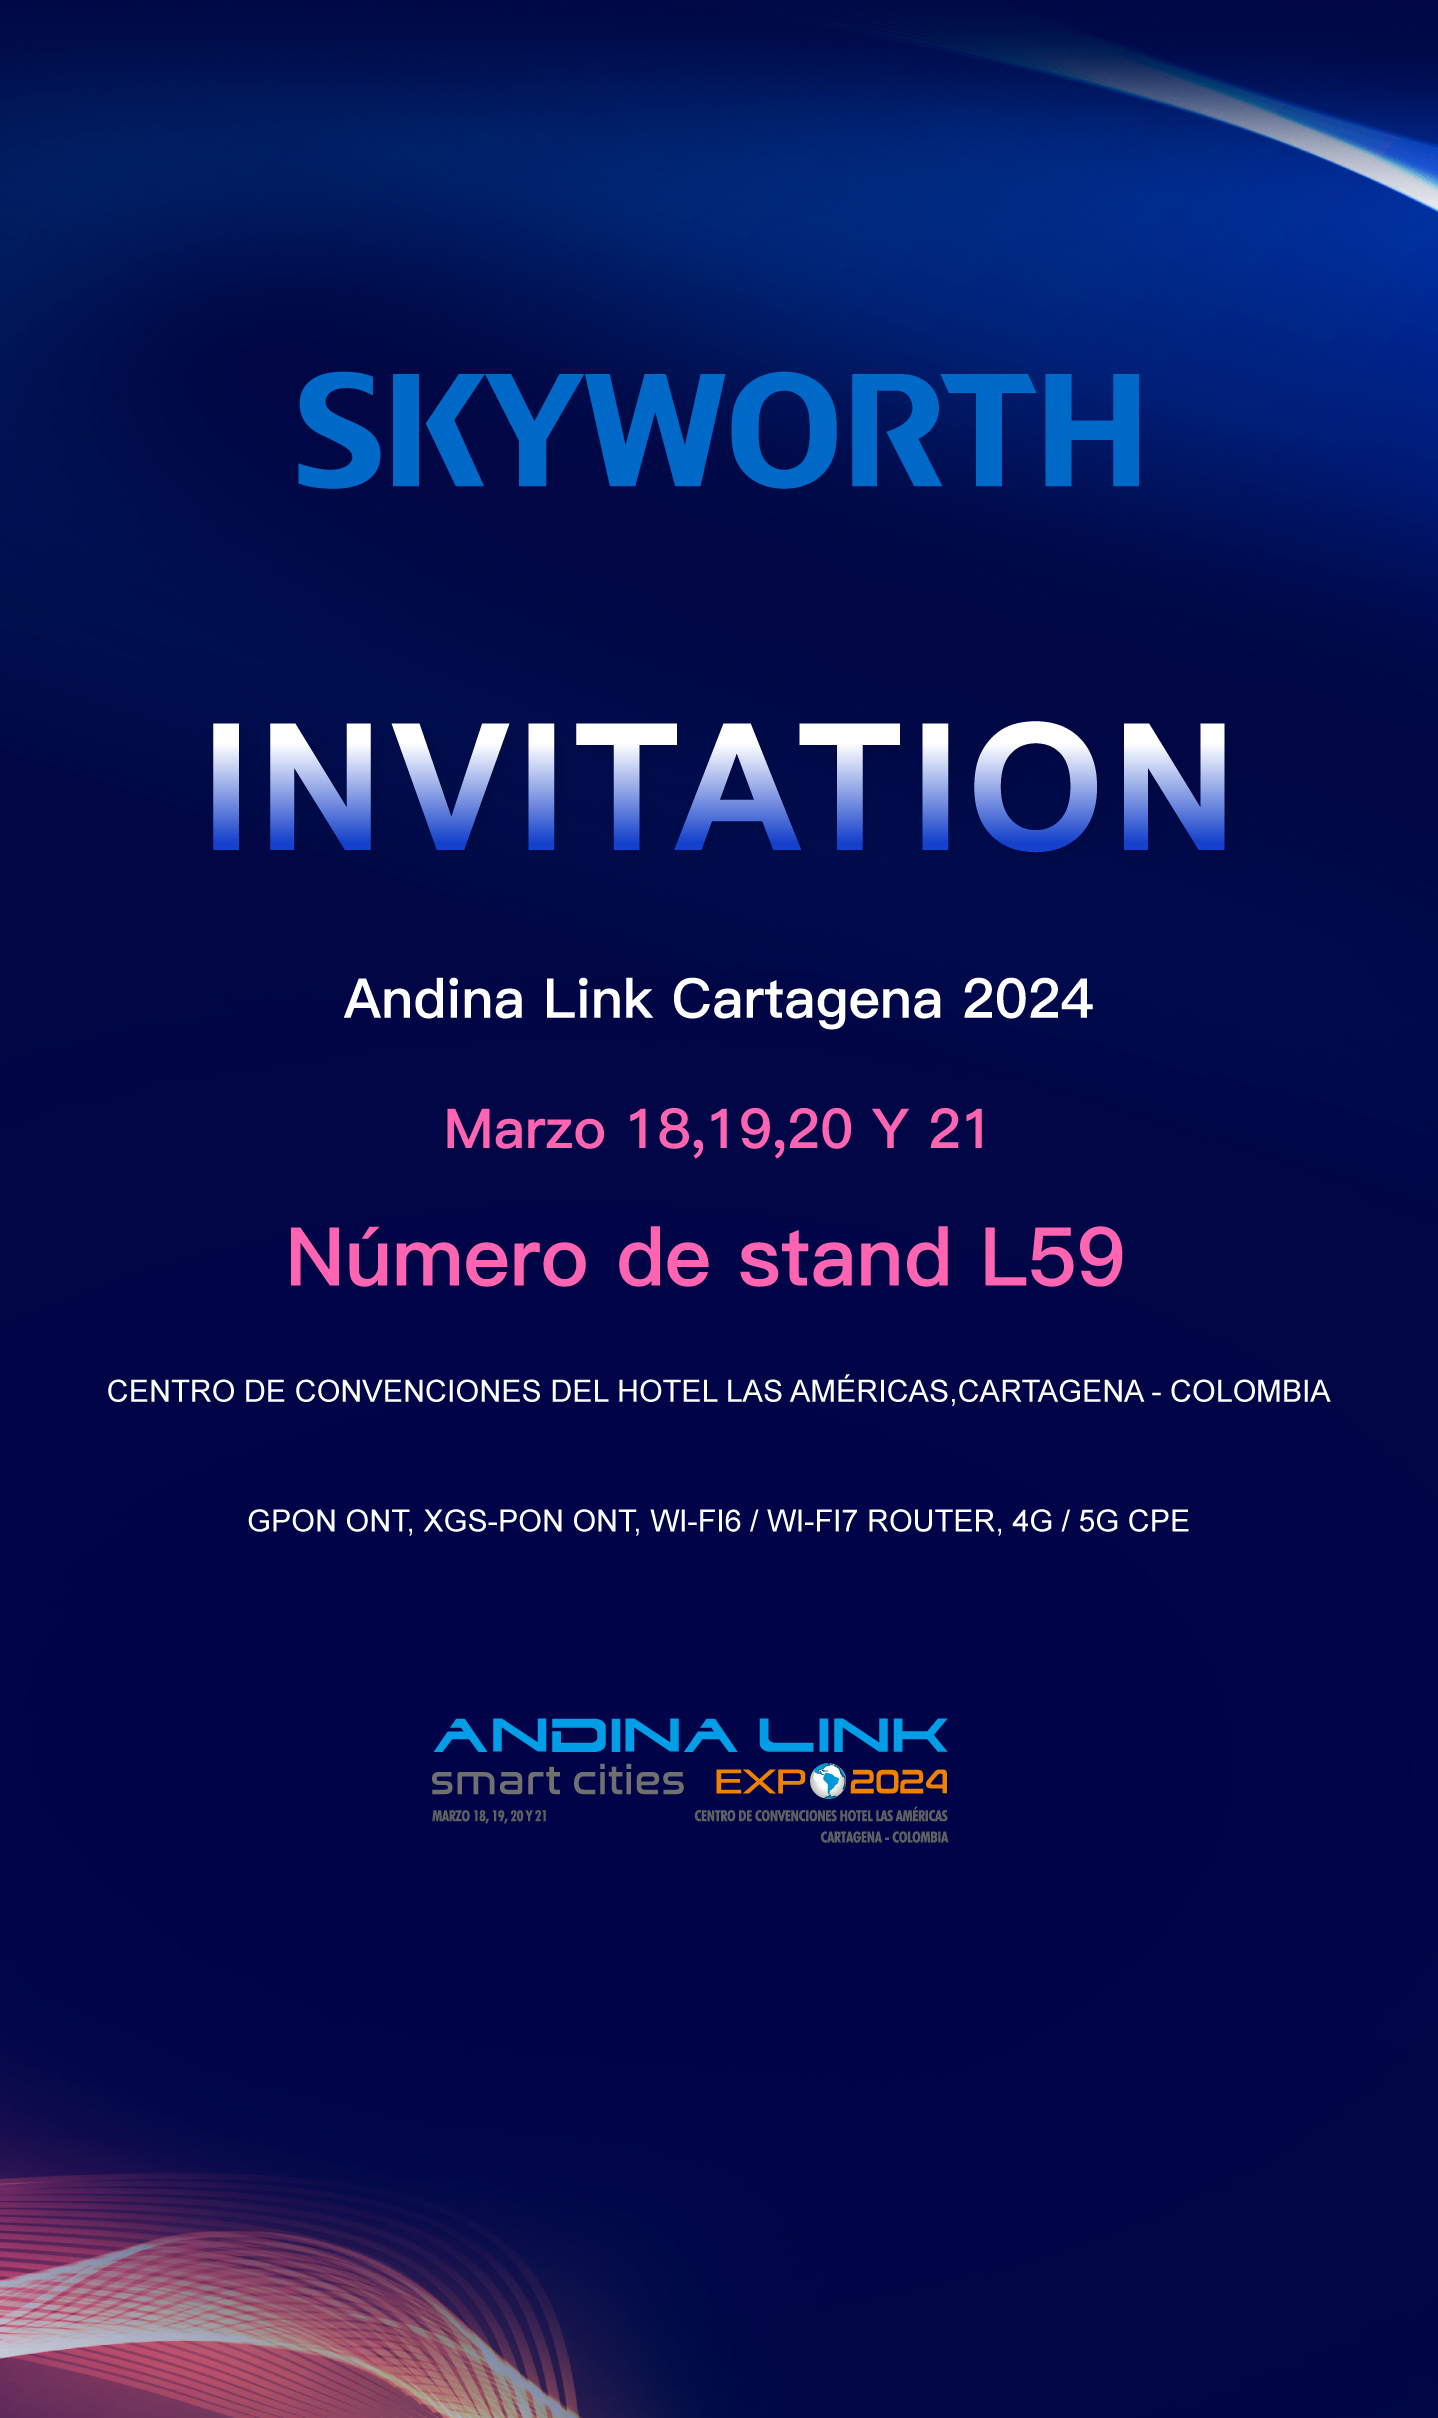 Invitation of Andina Link Cartagena 2024